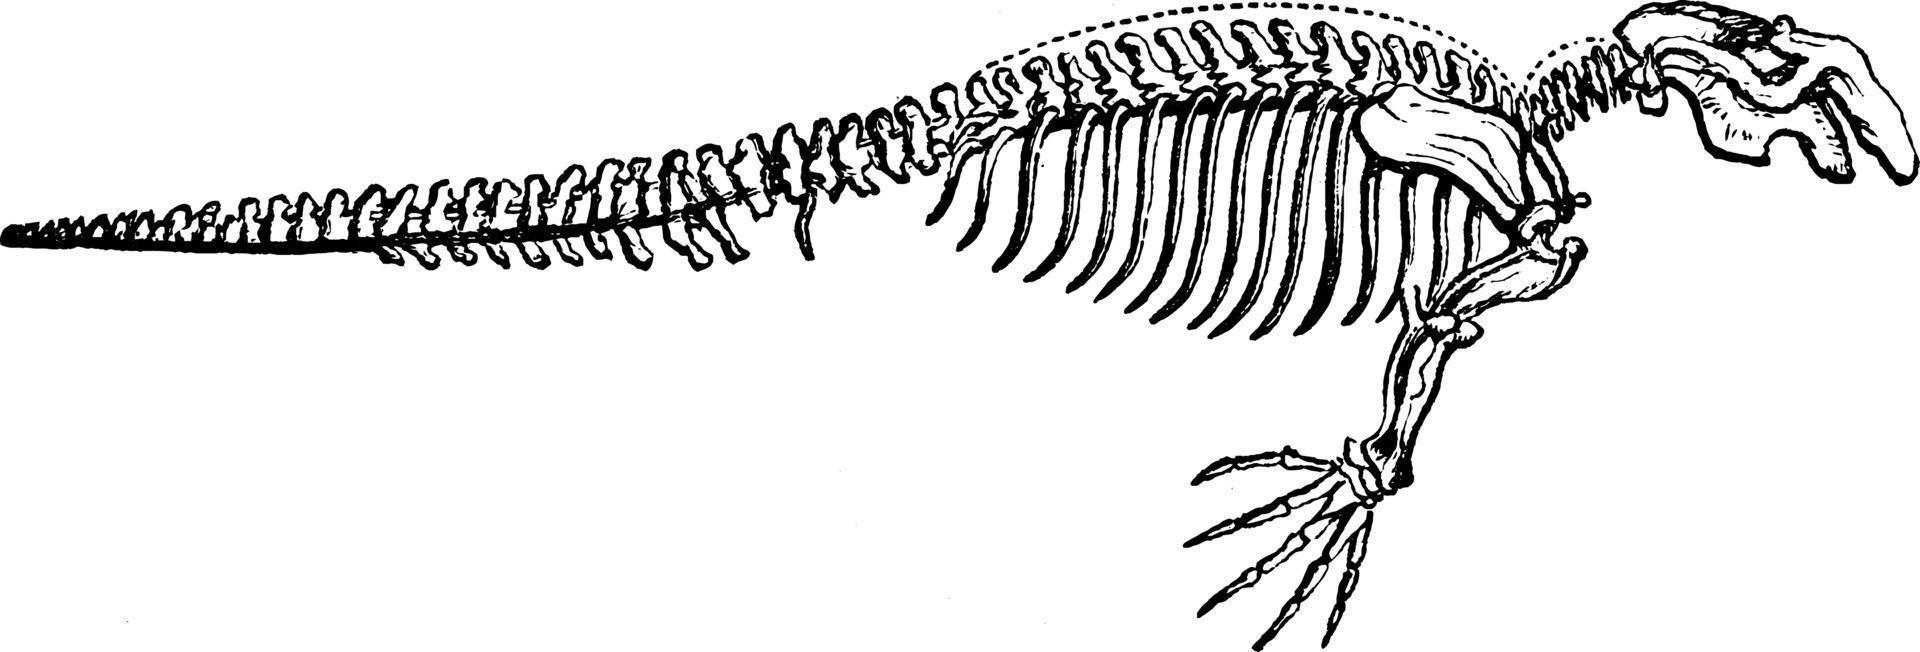 Skeleton of the Dugong, vintage illustration. vector